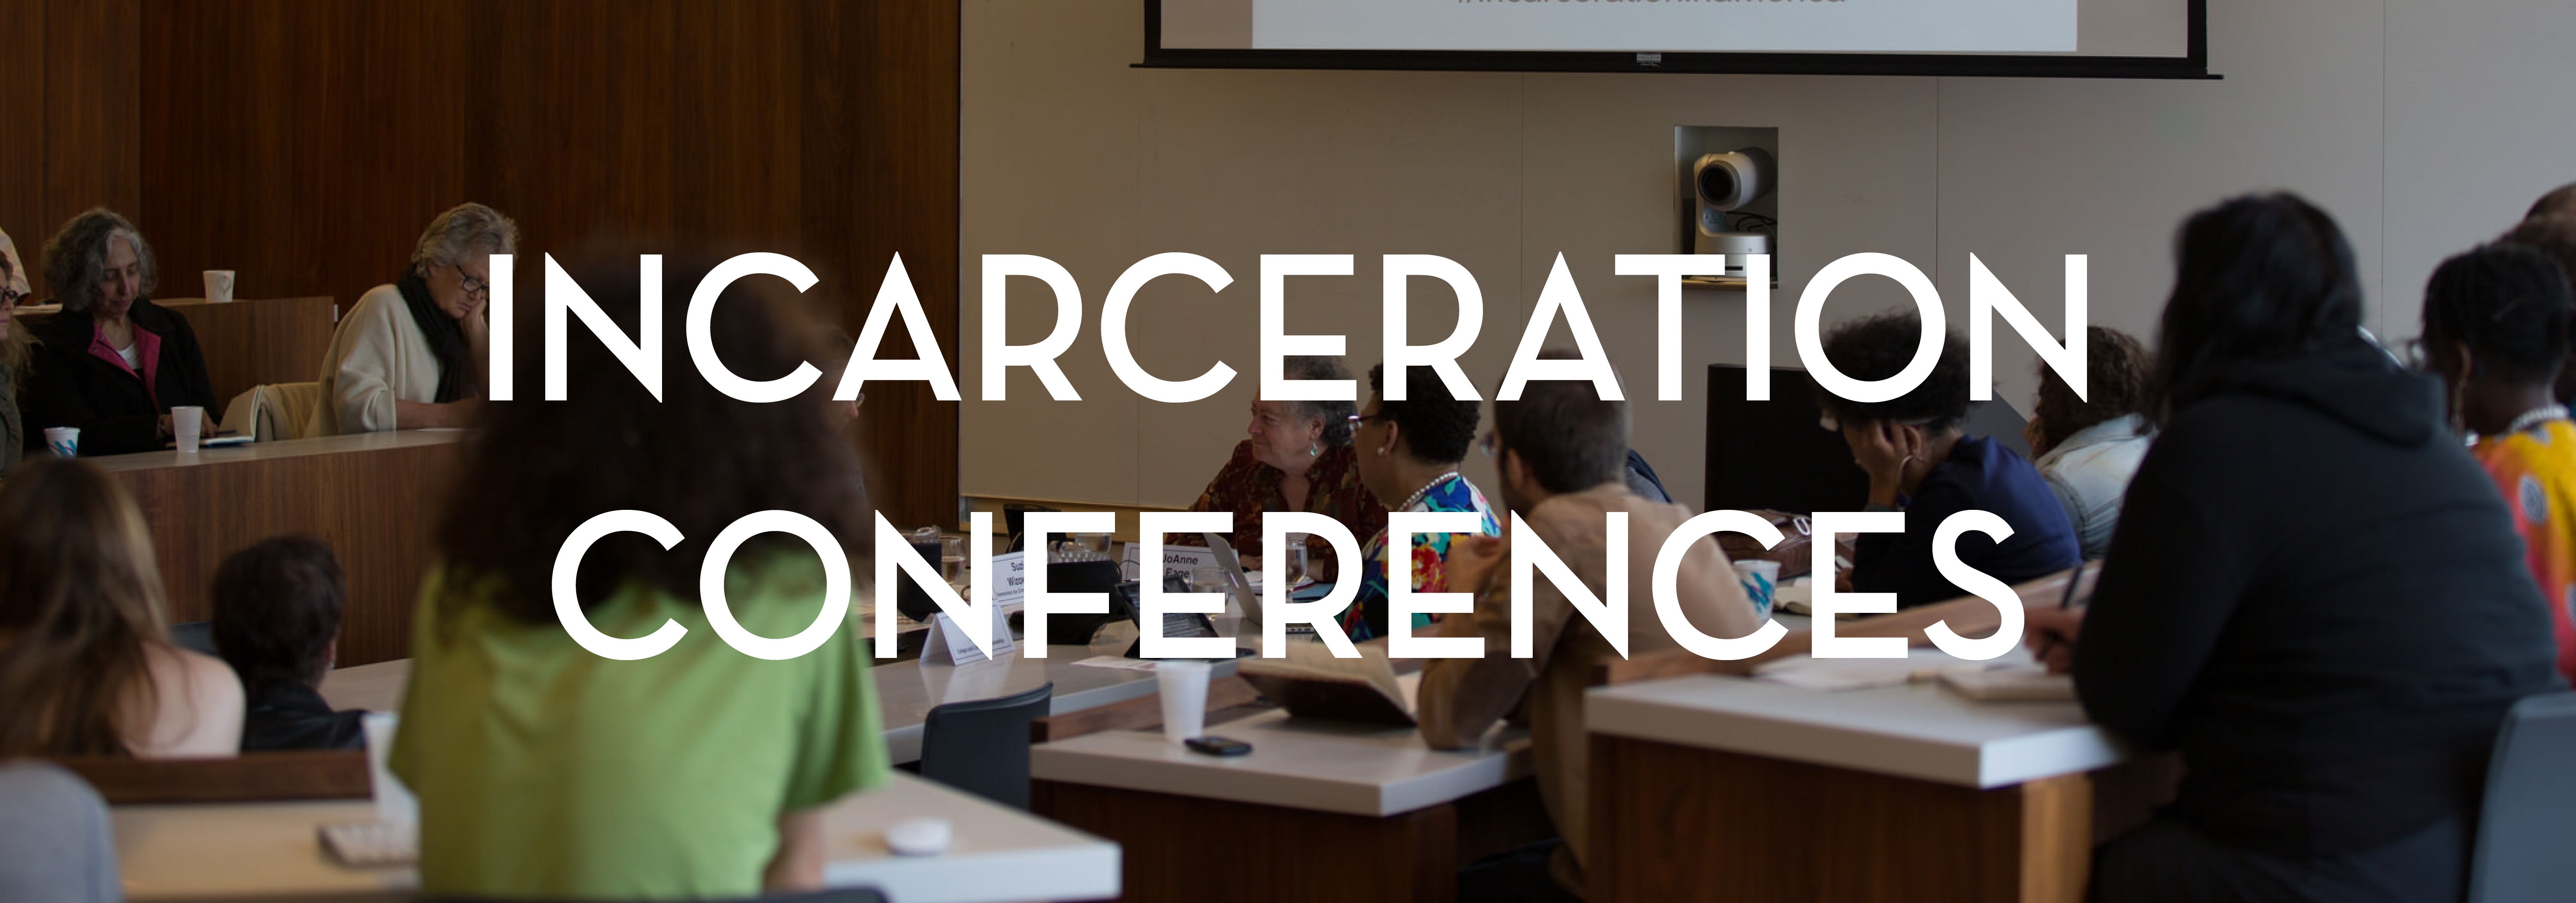 Incarceration Conferences